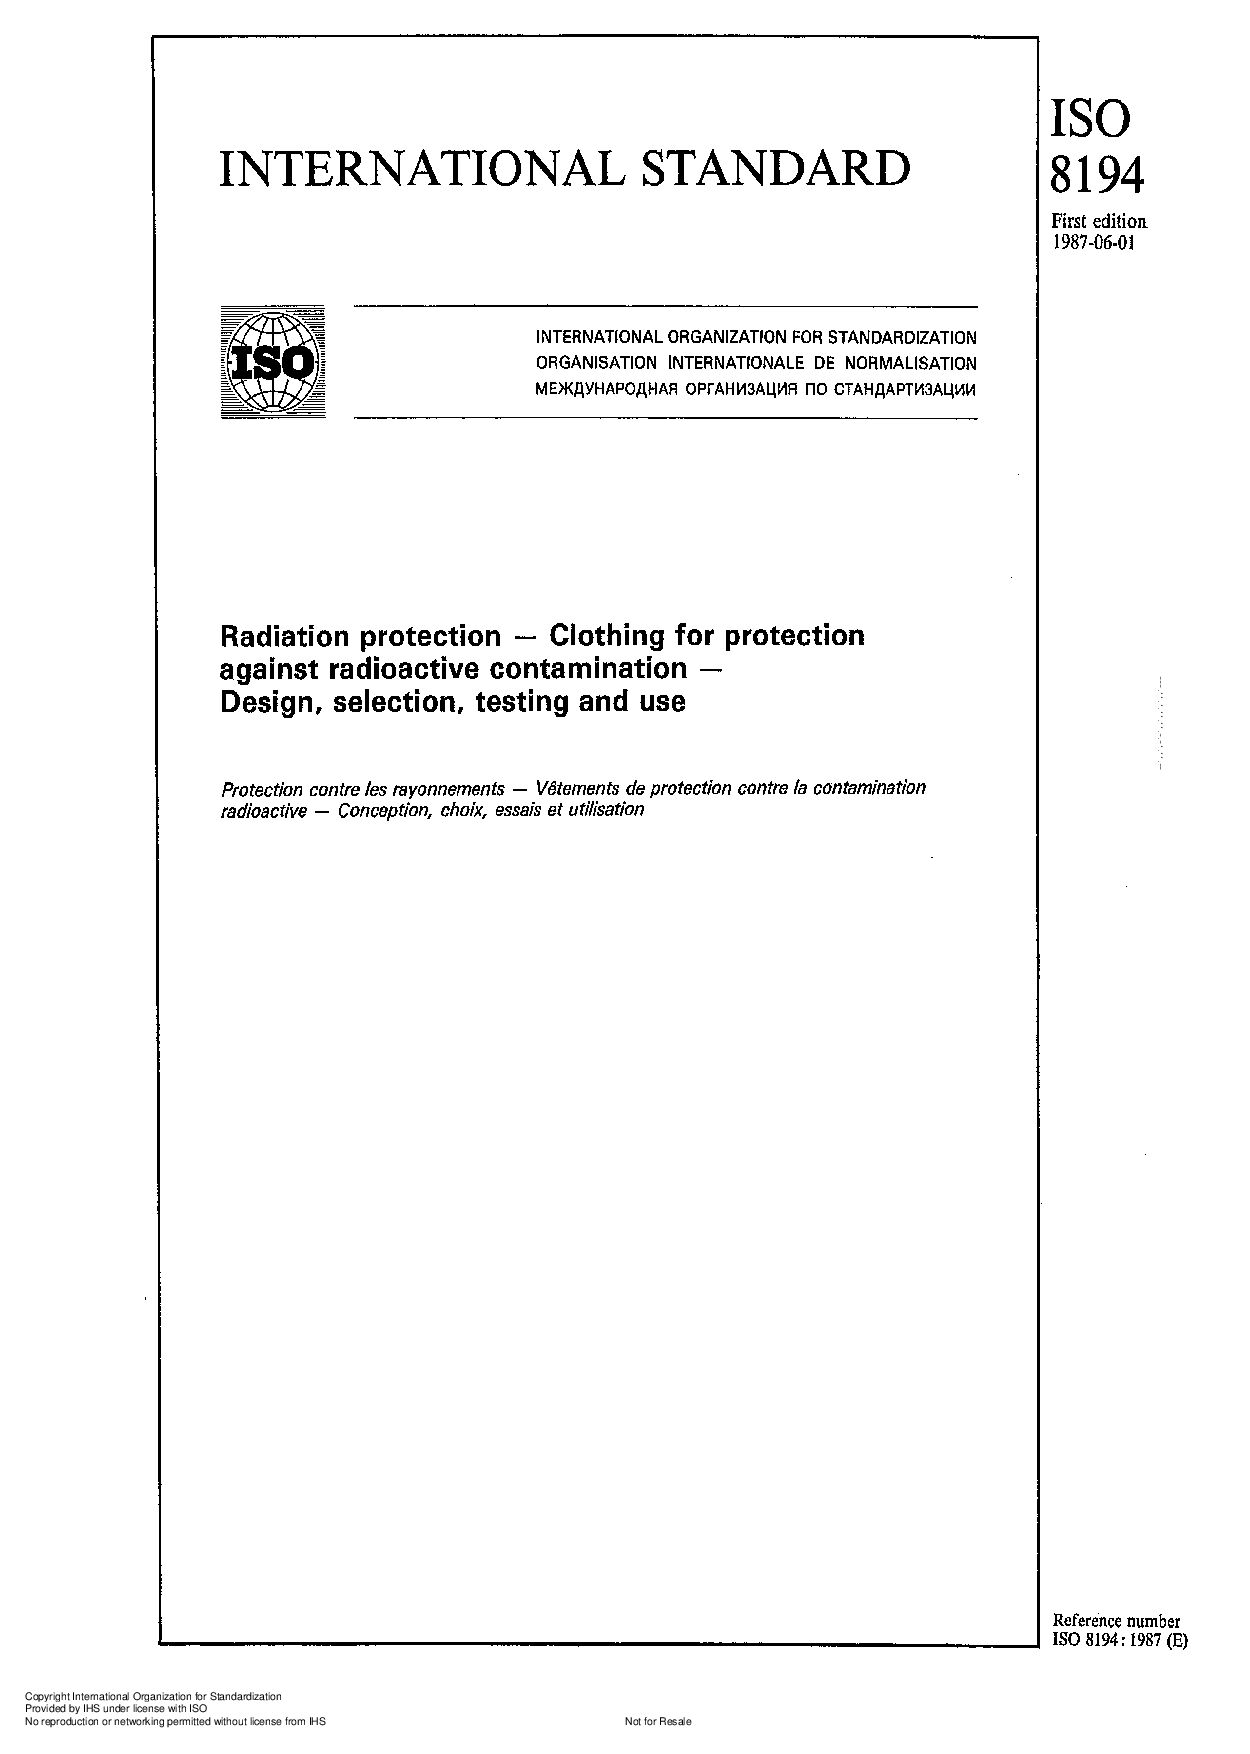 ISO 8194:1987封面图